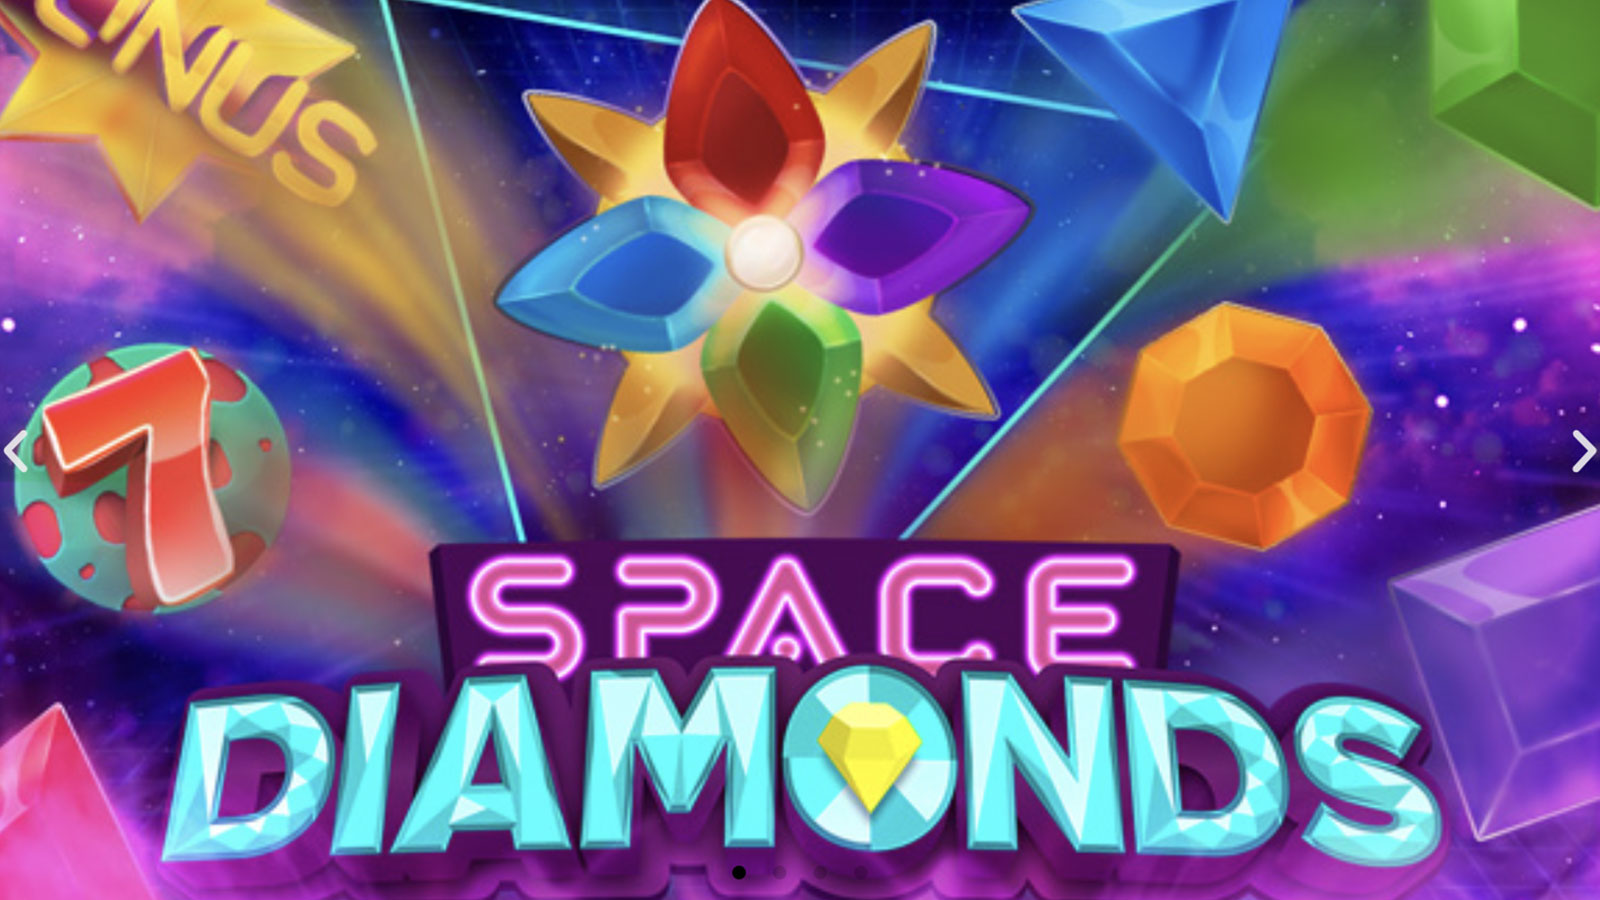 juegos-orion-arriendo-space-diamonds-1